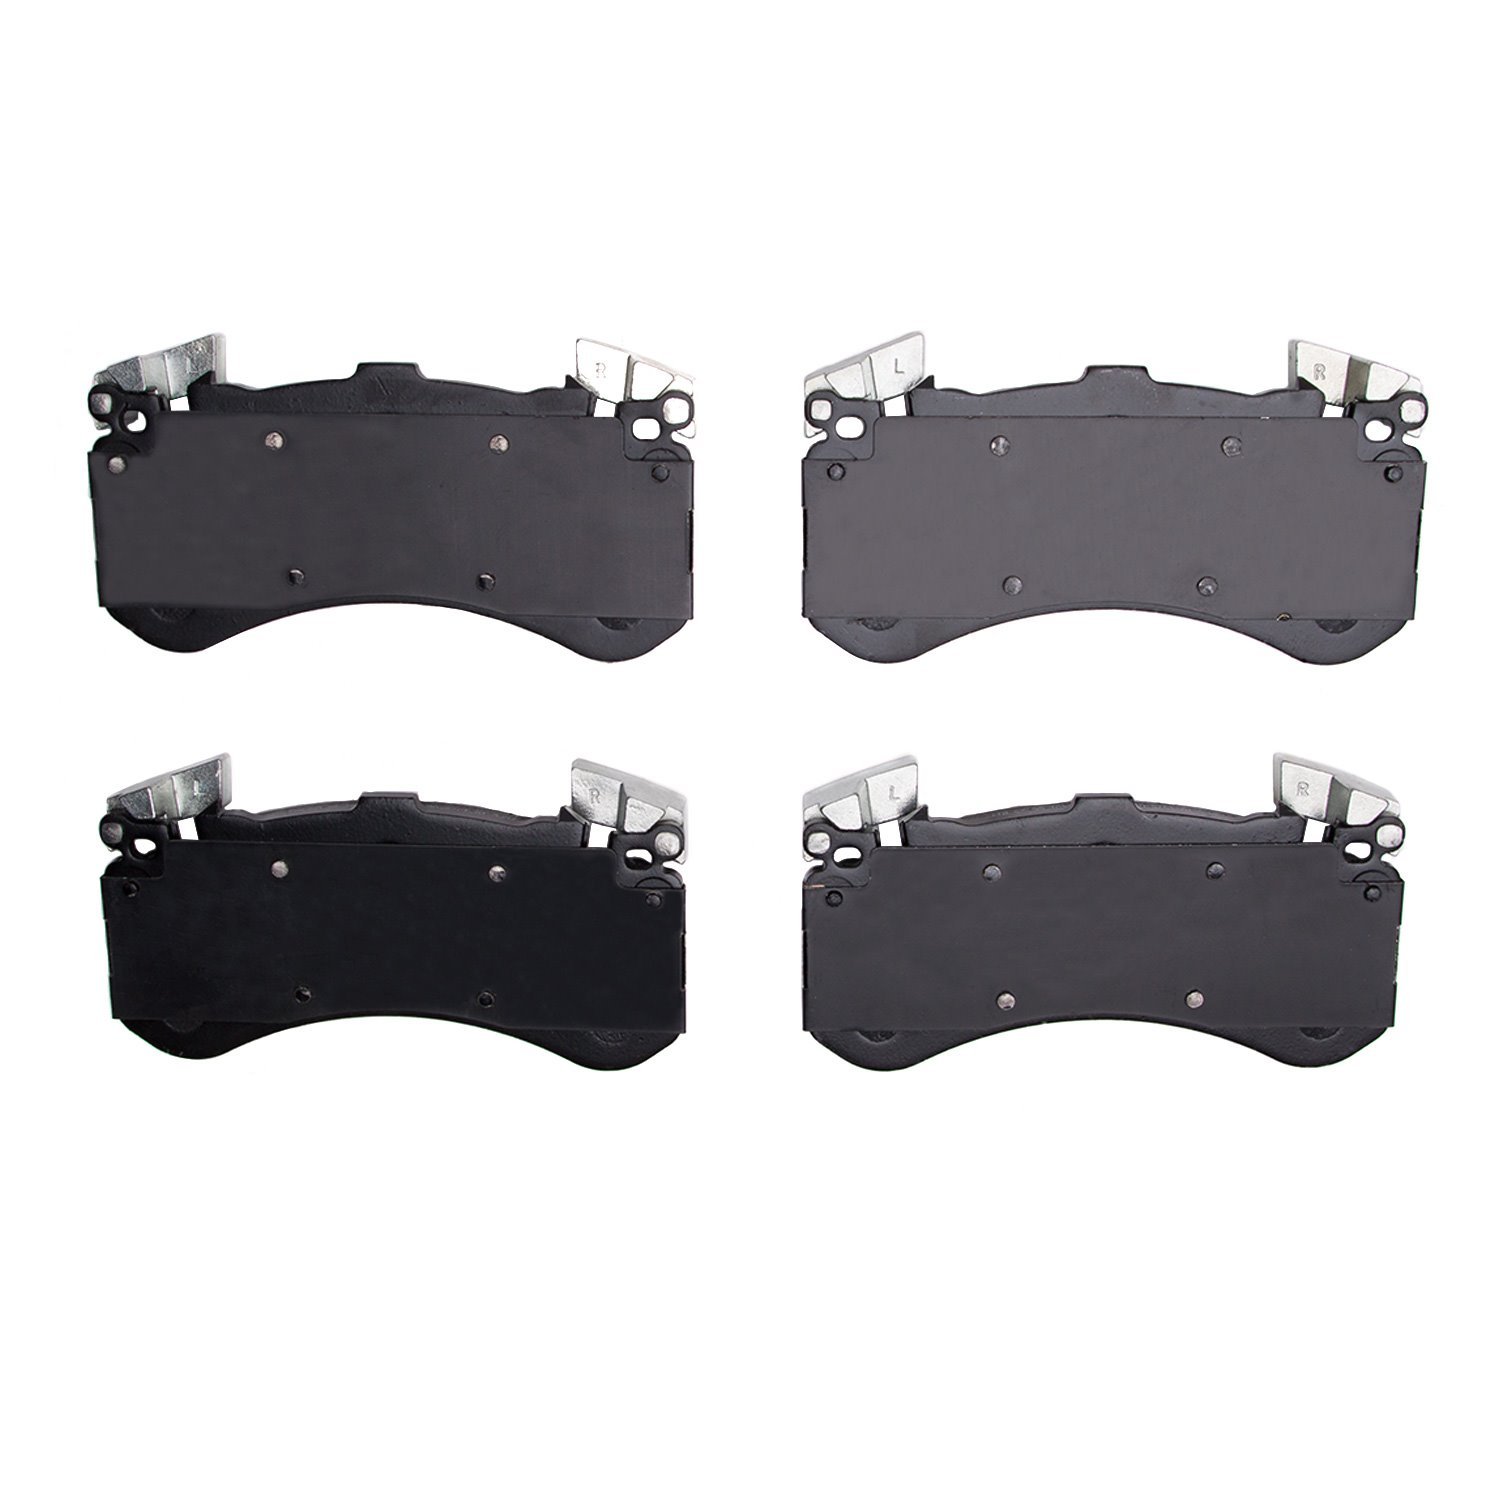 1310-1575-00 3000-Series Ceramic Brake Pads, 2011-2019 Multiple Makes/Models, Position: Front